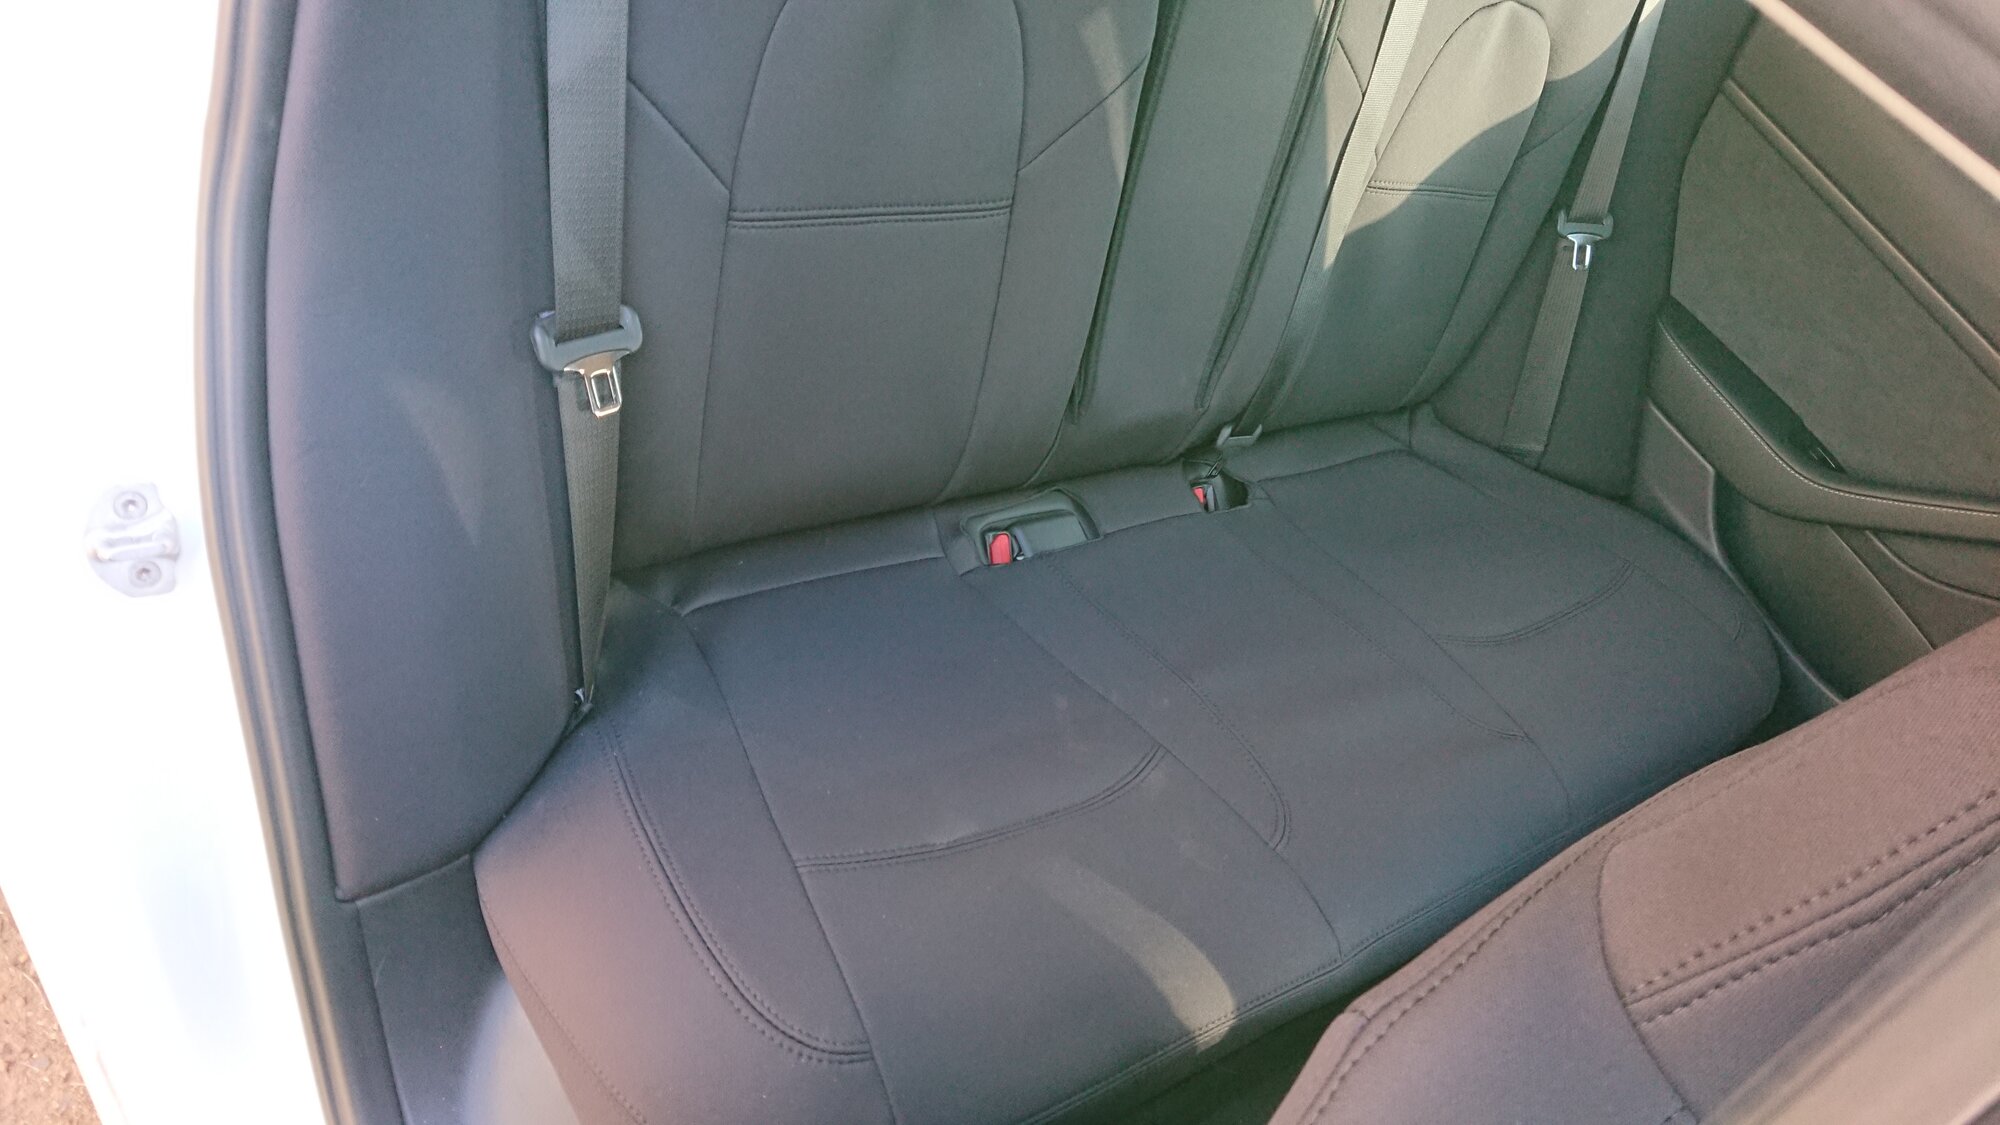 First Australian-made Seat Covers for Model 3 - Neoprene